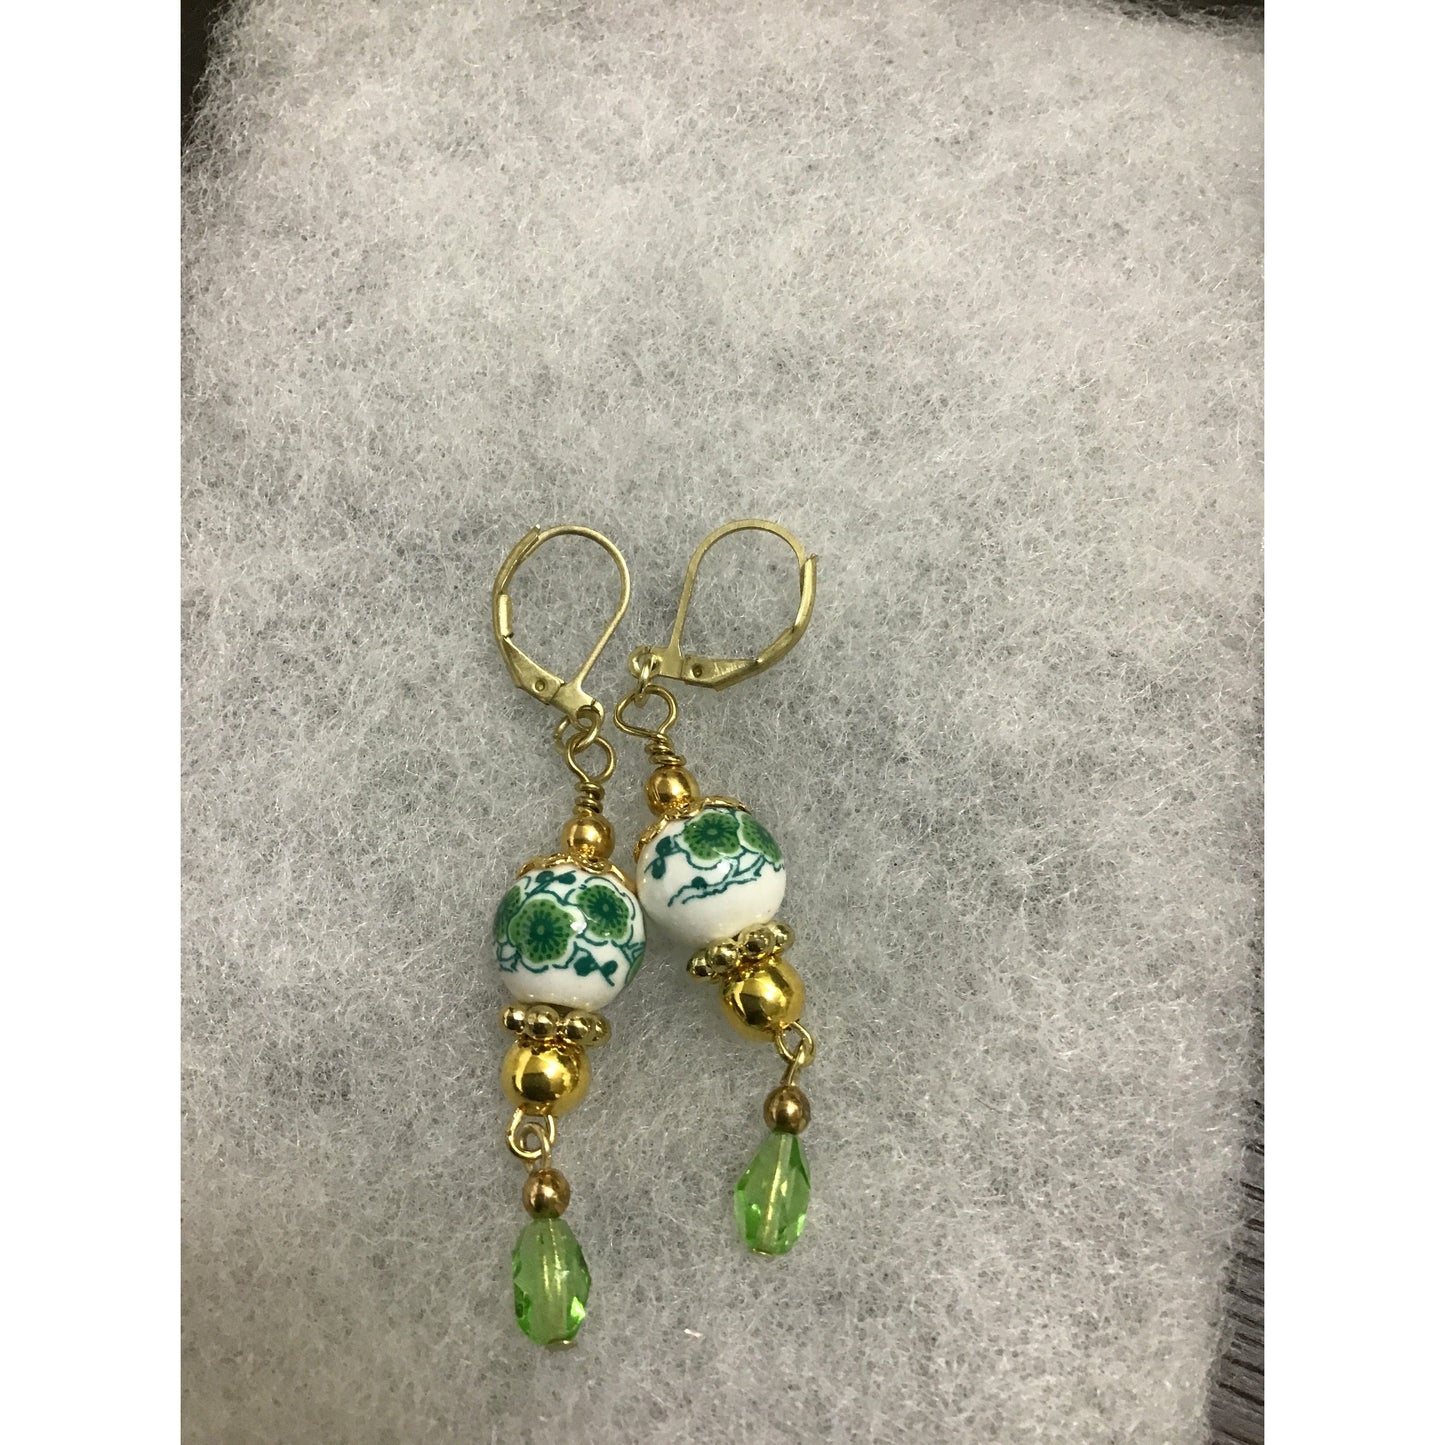 Green flower earrings gold leverbacks